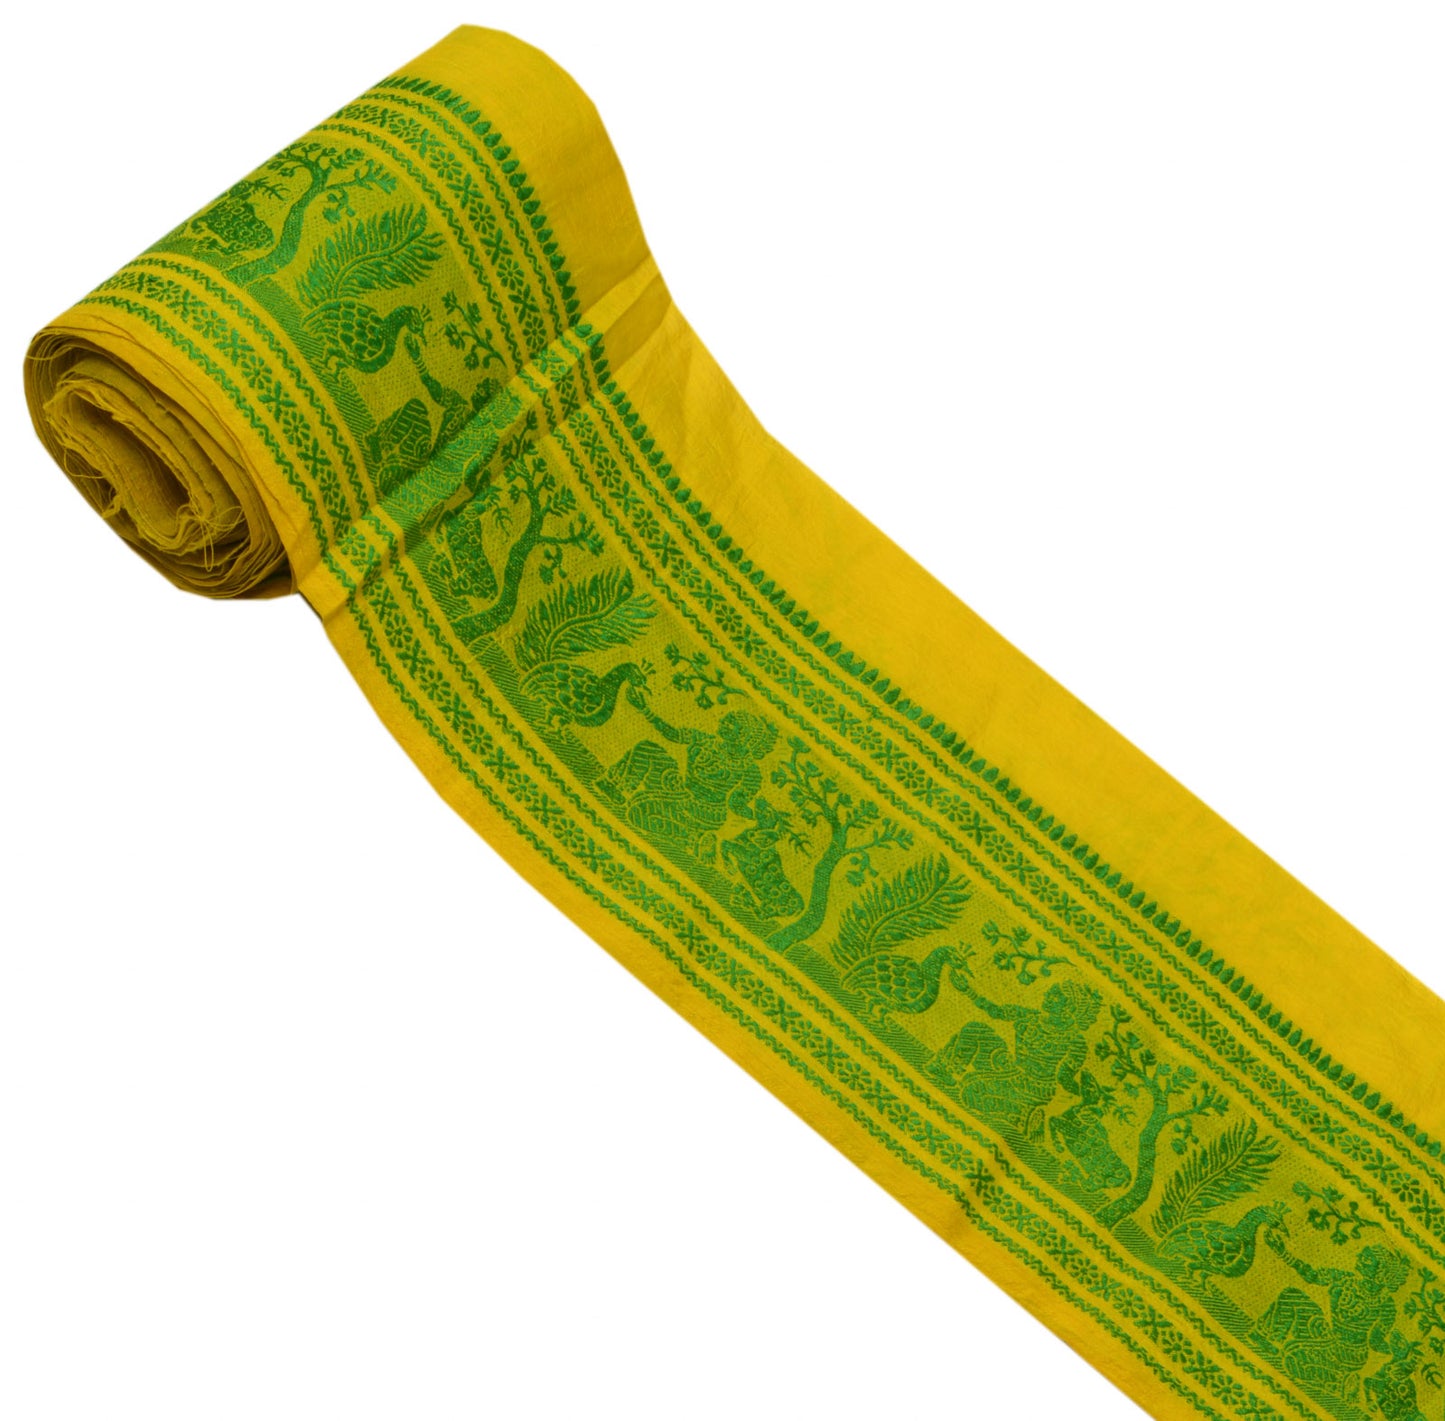 Sushila Vintage Green Saree Border Indian Craft Sewing Woven Baluchari Trim Lace